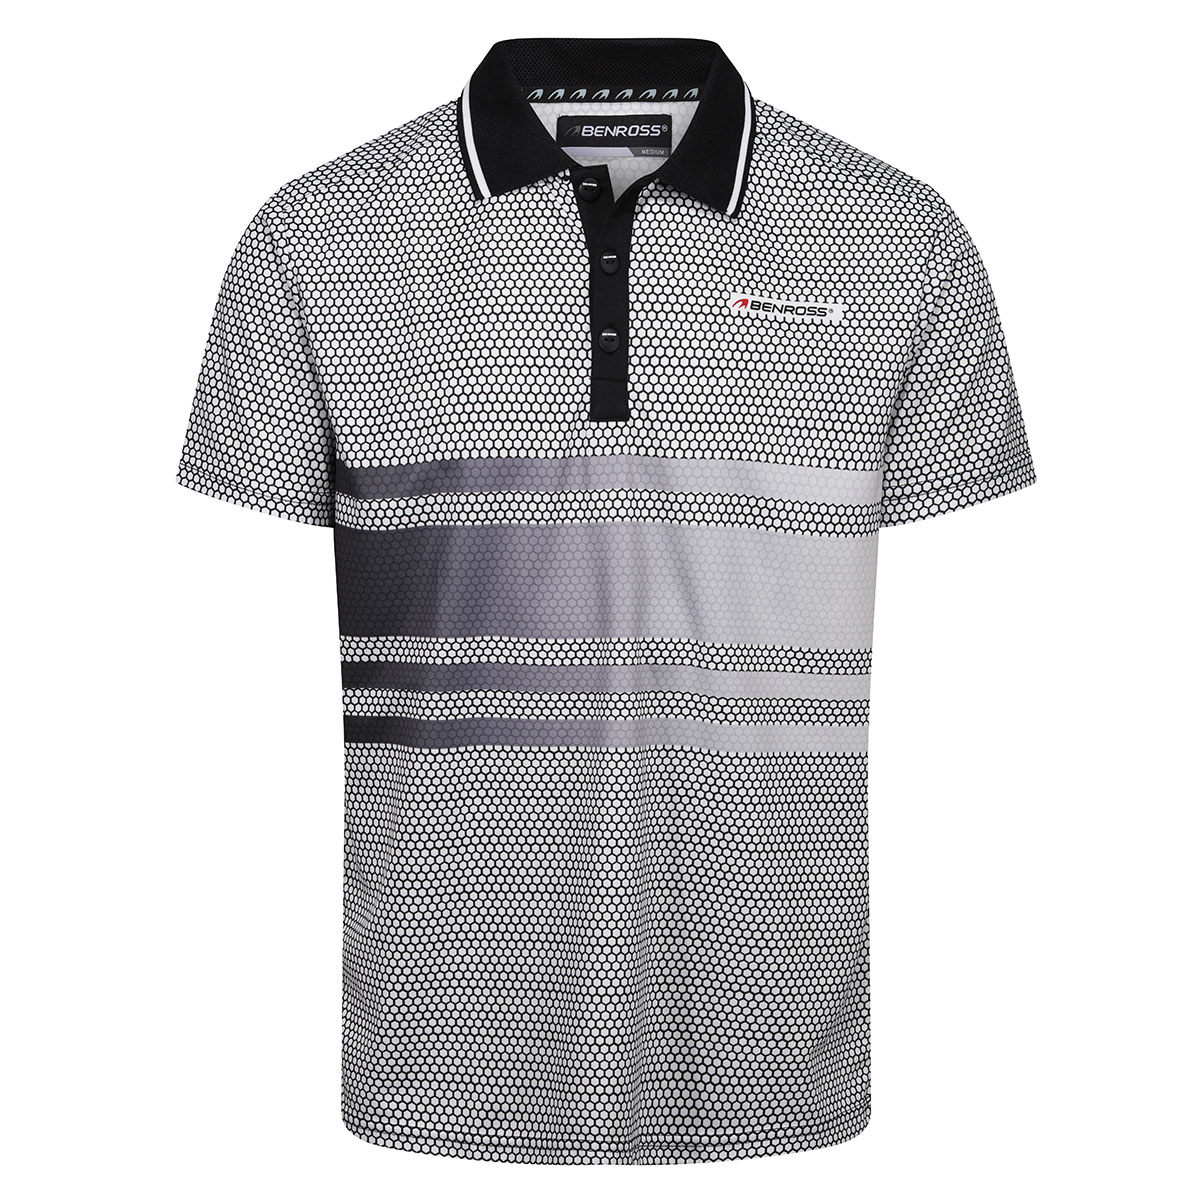 Benross Men's Hex Print Stretch Golf Polo Shirt from american golf